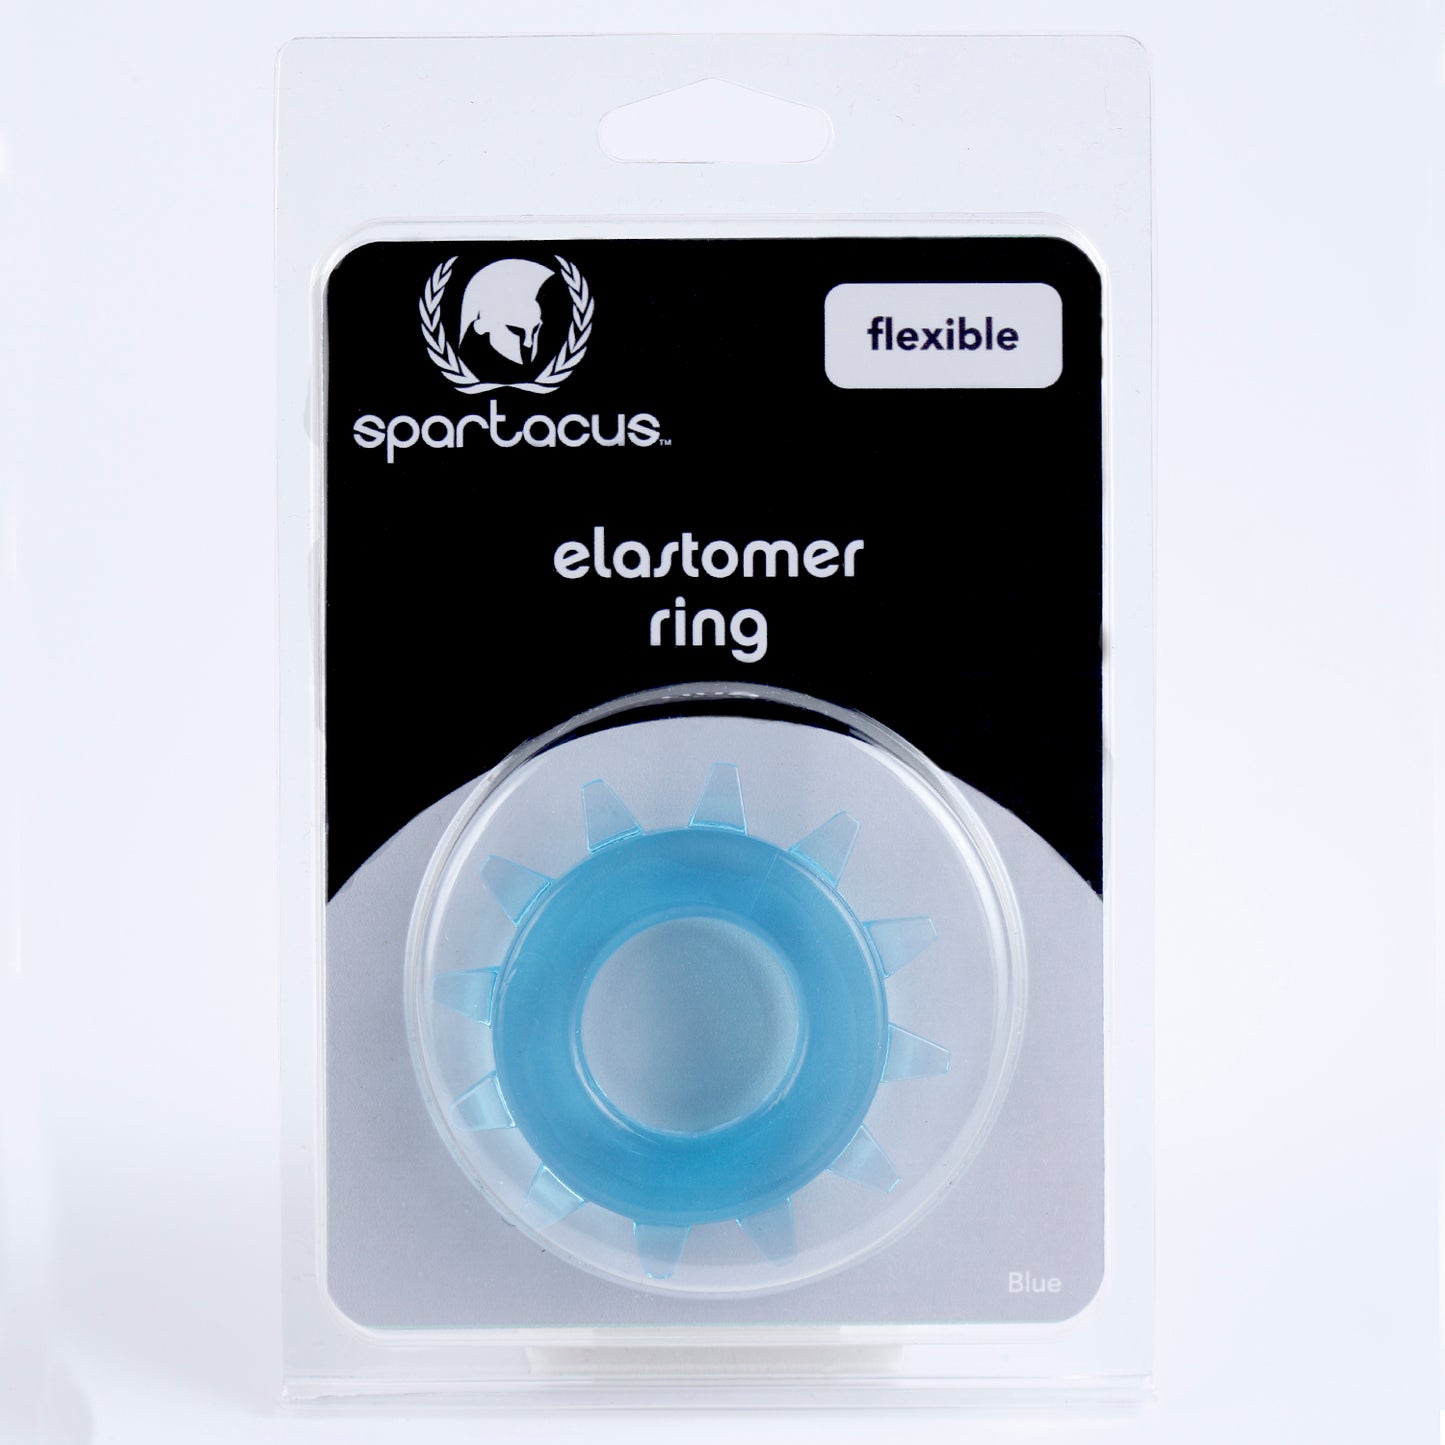 The Elastomer Stud Cock Ring